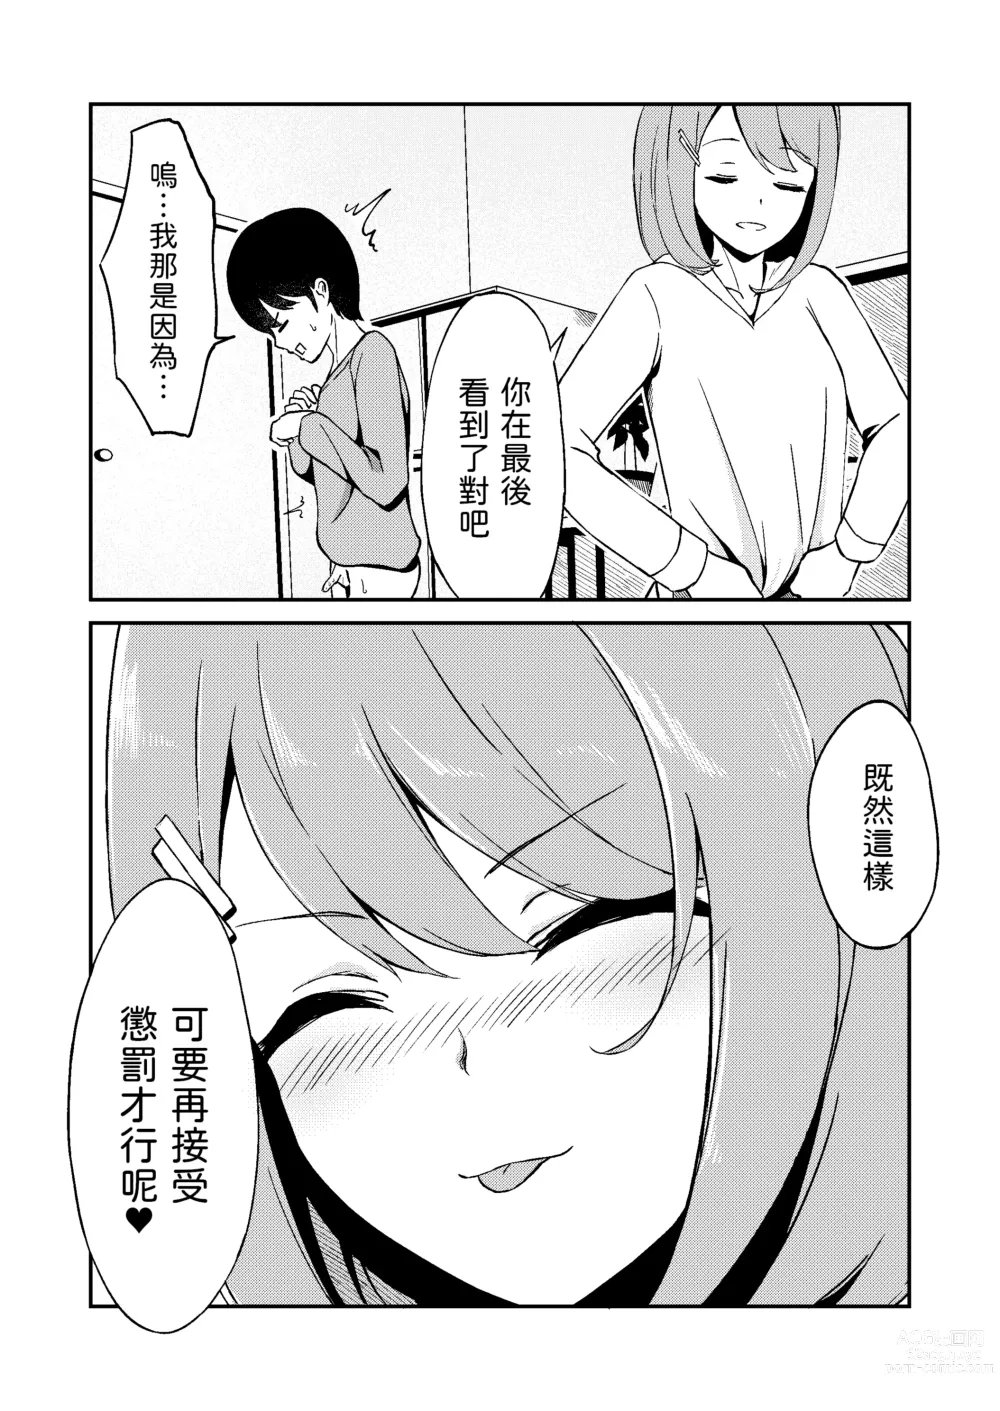 Page 37 of doujinshi Kimi ga Mienakutatte